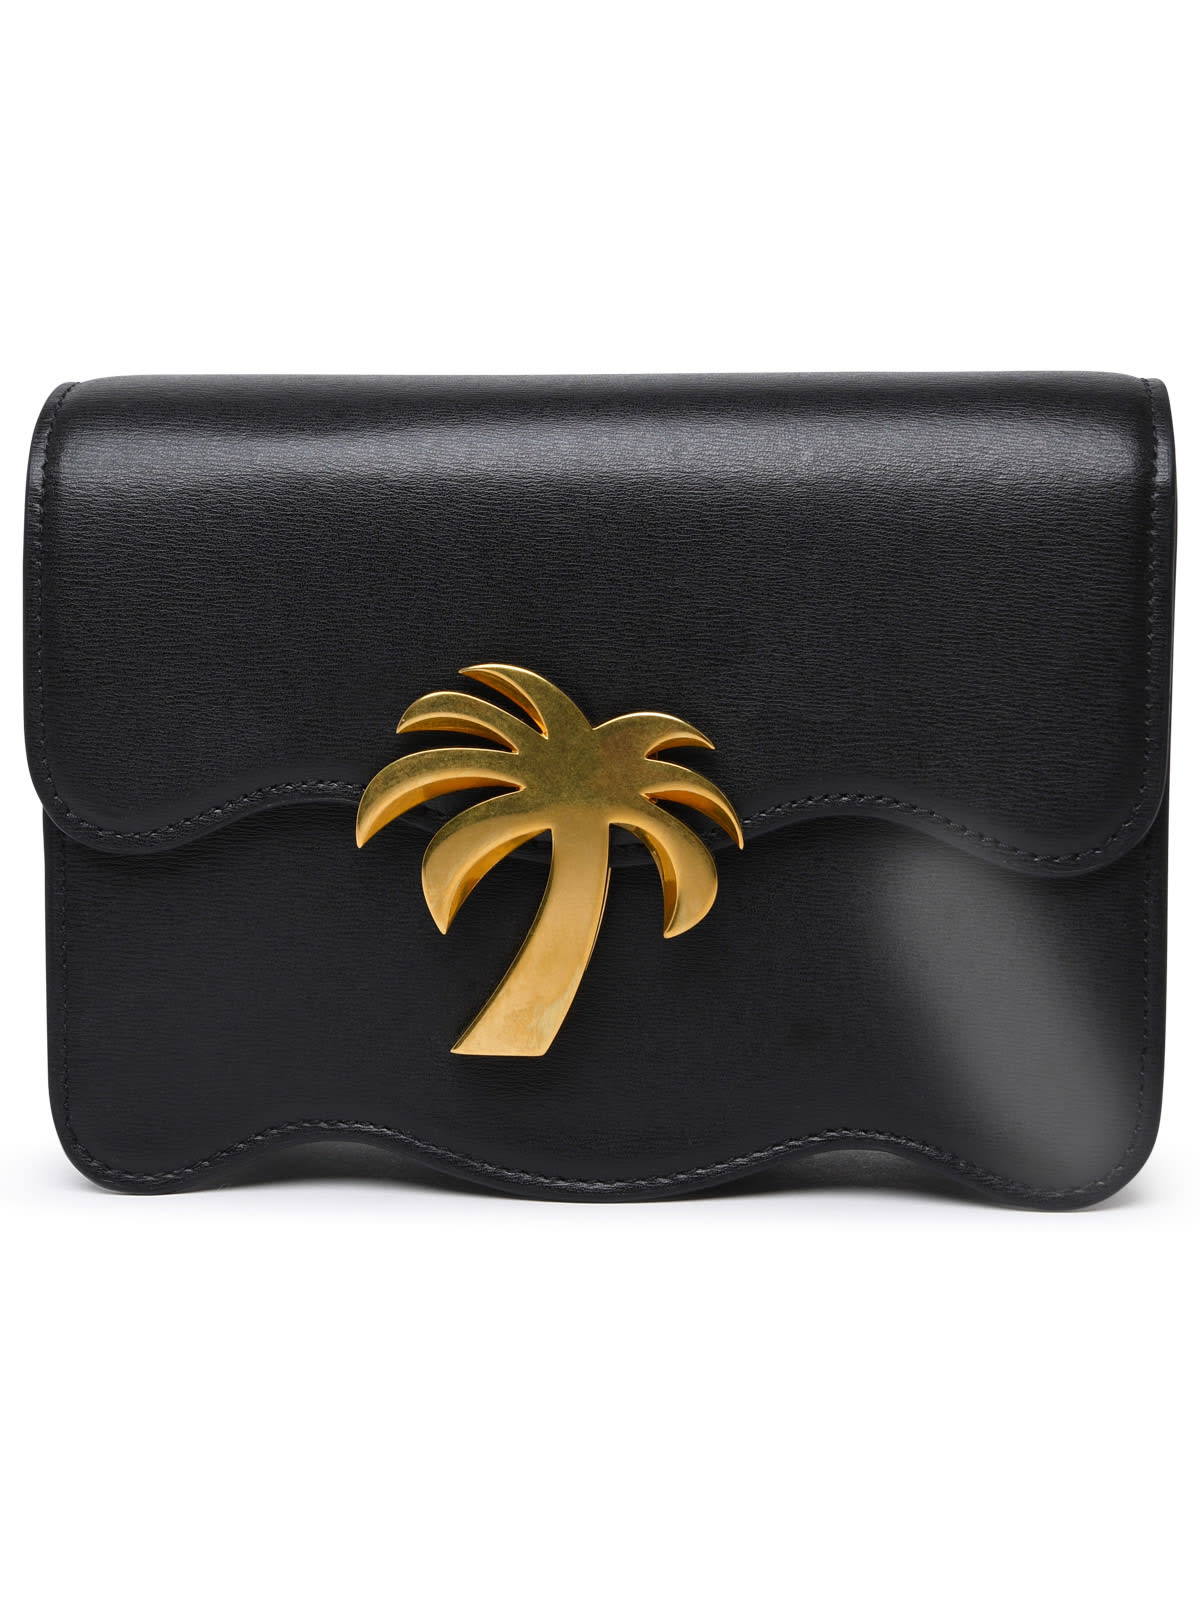 Palm Angels Black Leather palm Beach Bag